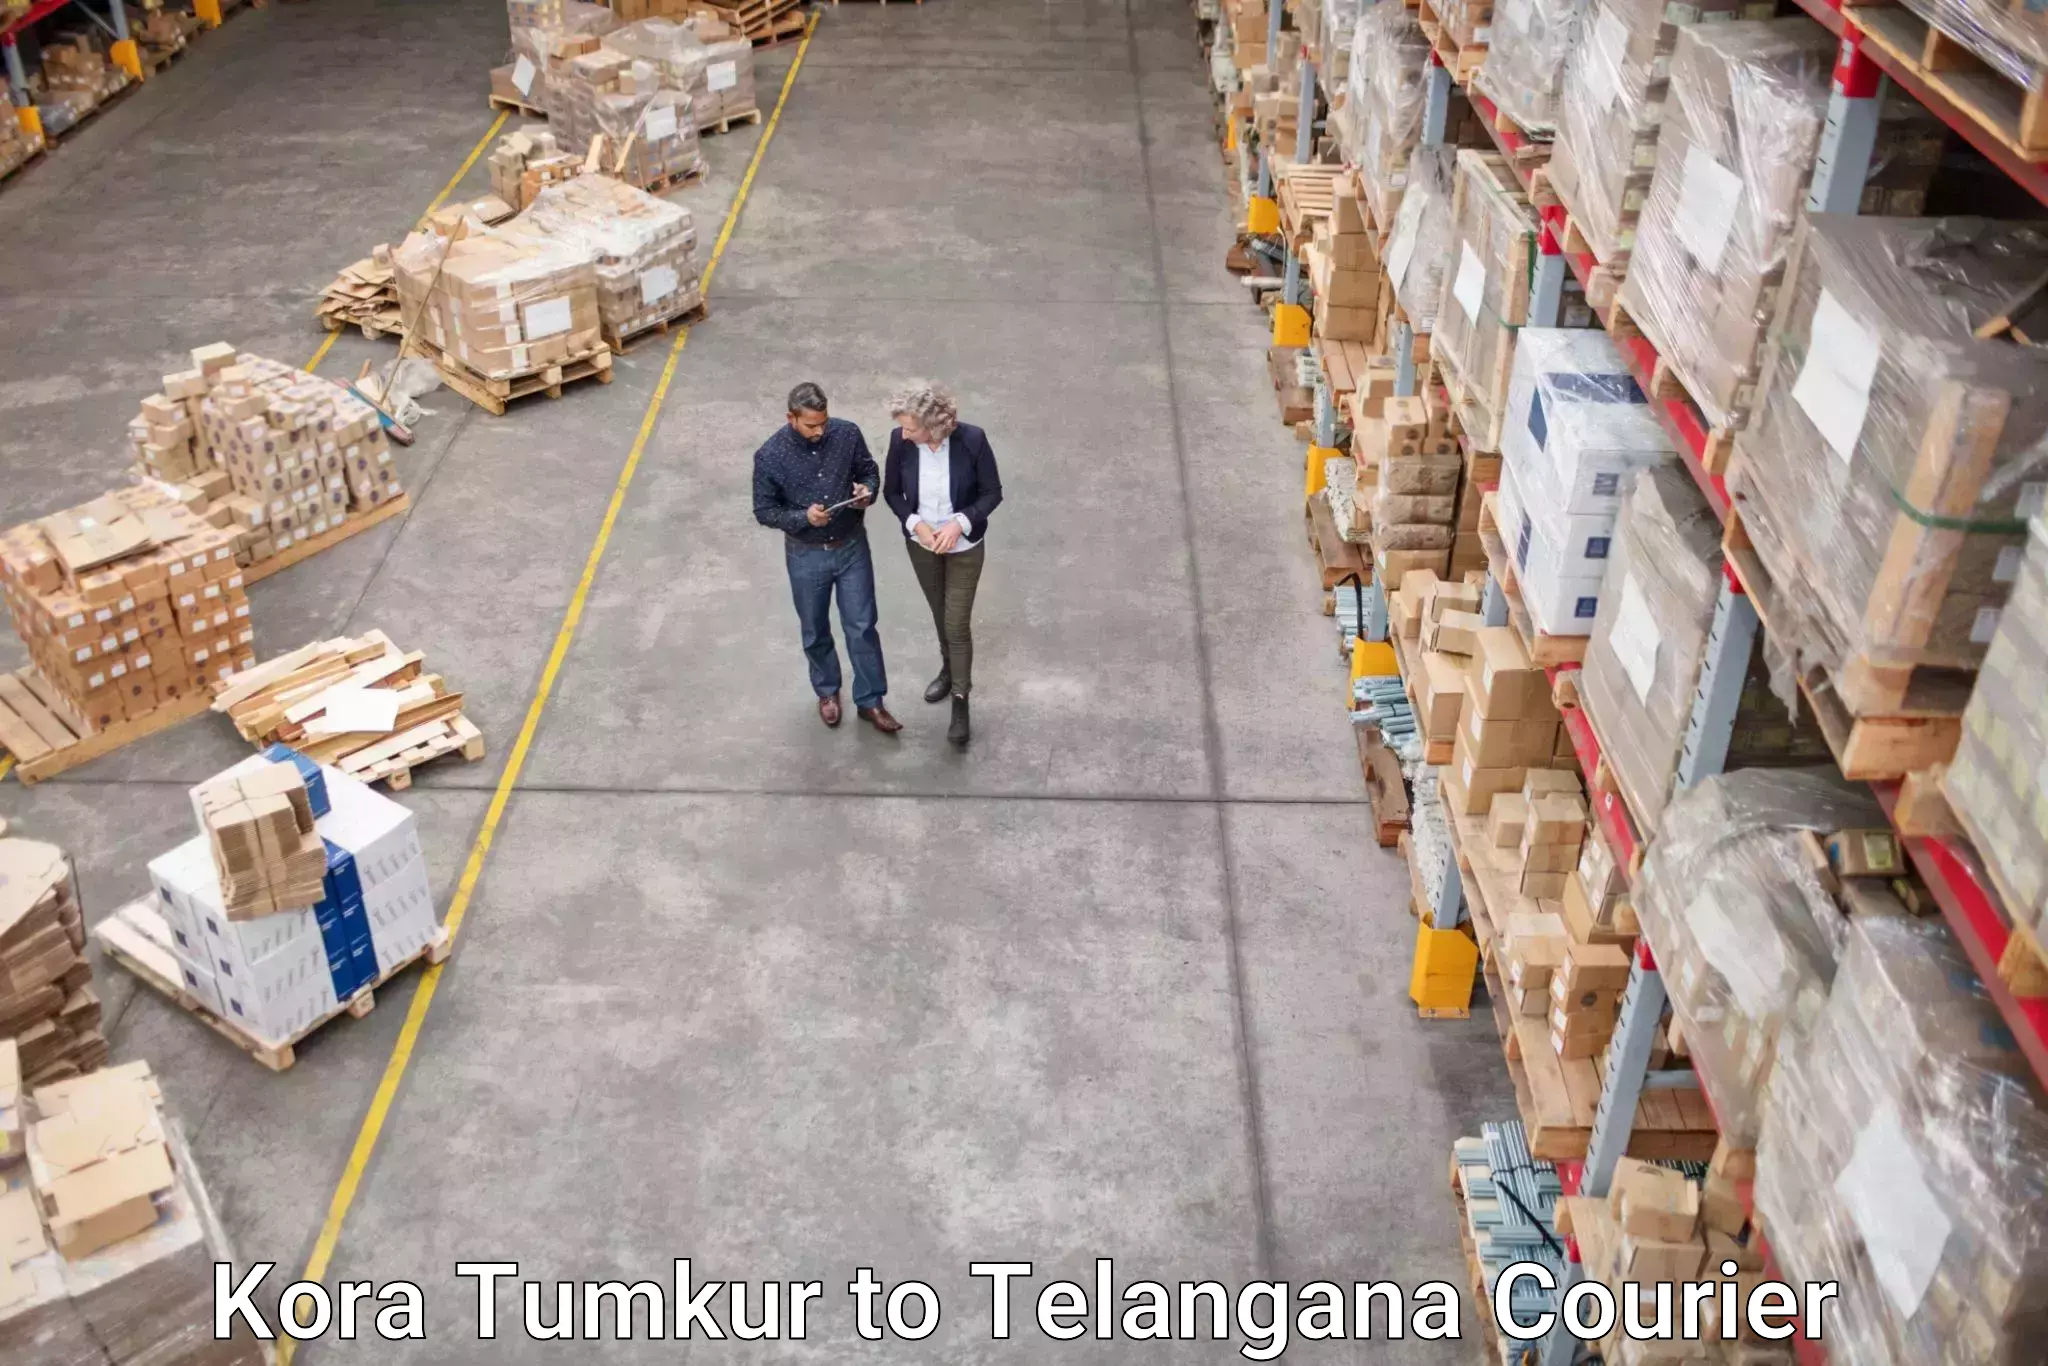 Global courier networks Kora Tumkur to Chandur